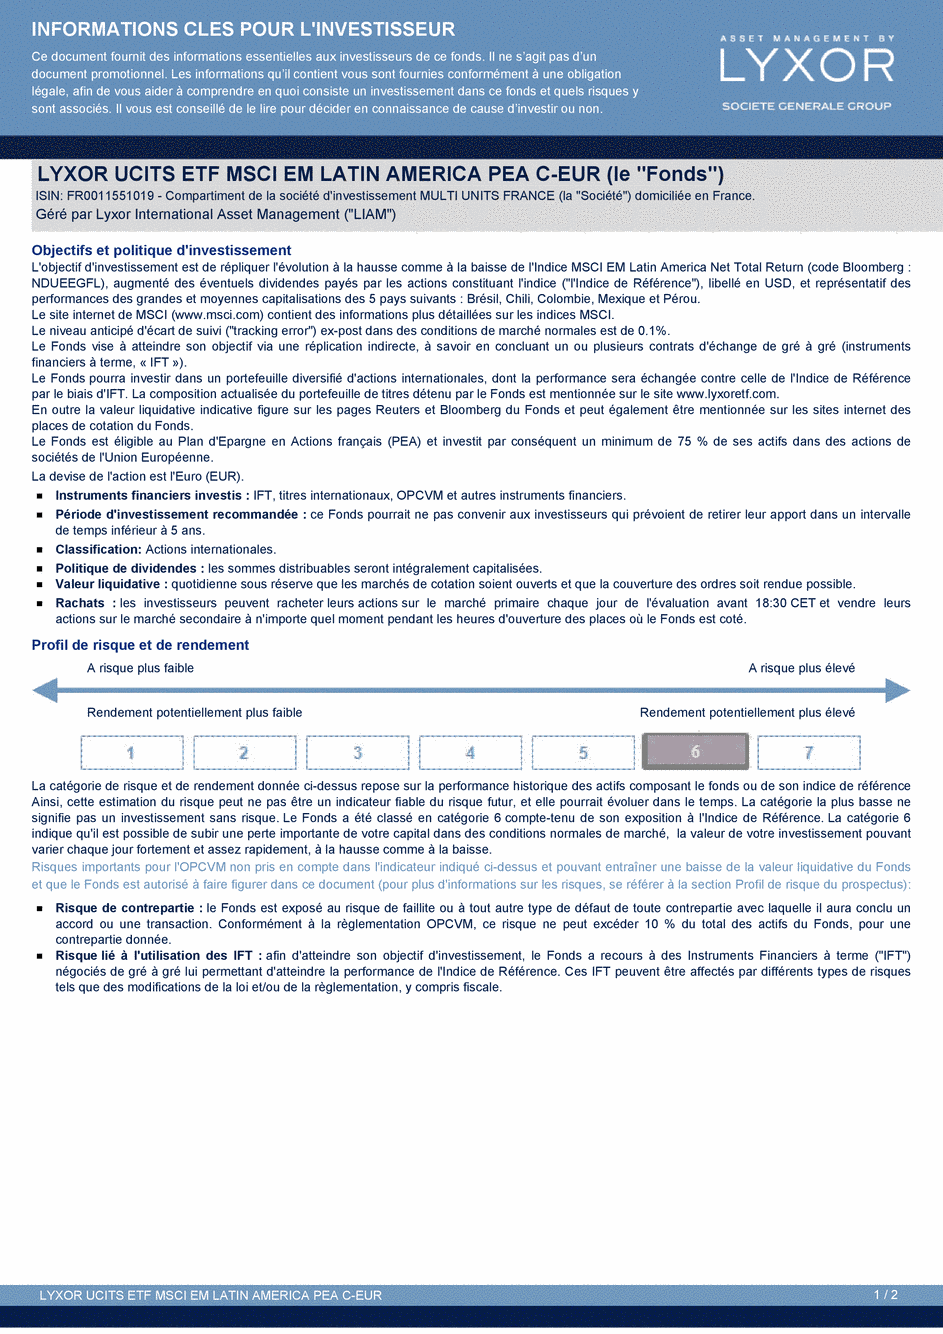 DICI Lyxor PEA Amerique Latine (MSCI EM Latin America) UCITS ETF - Capi. - 22/05/2015 - Français